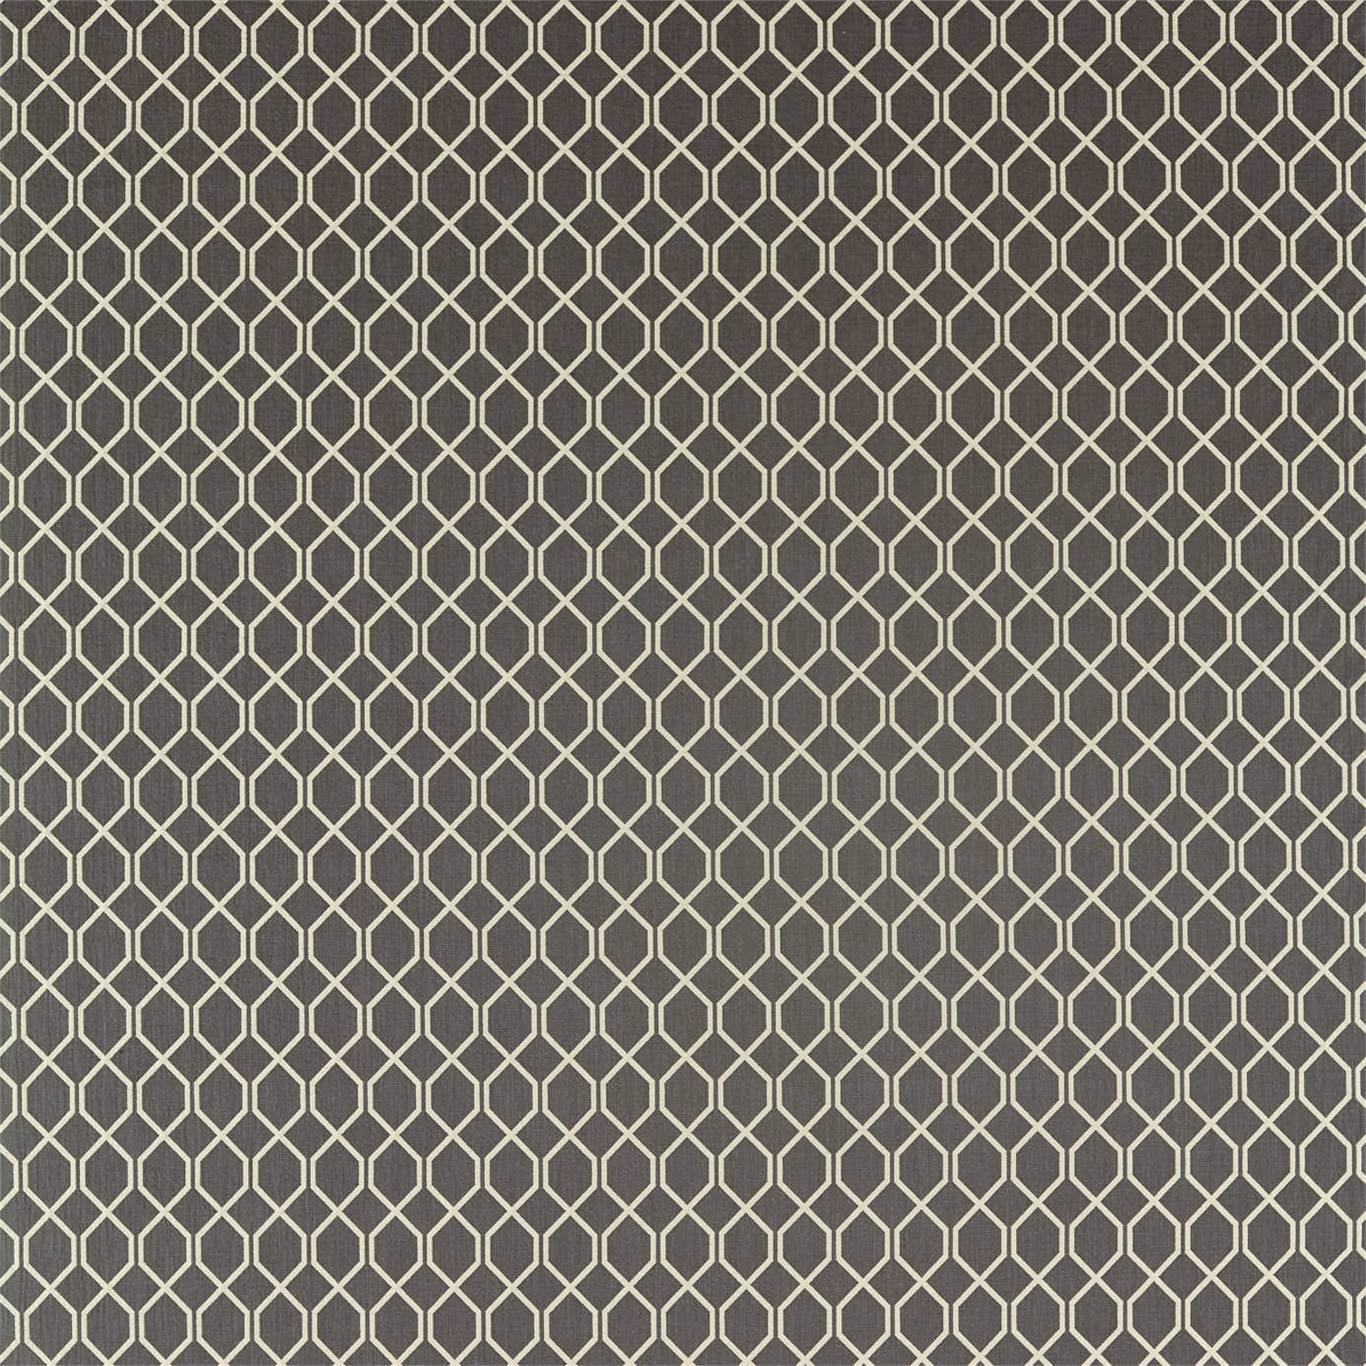 Botanic Trellis Fabric by Sanderson - DLNC236793 - Flint